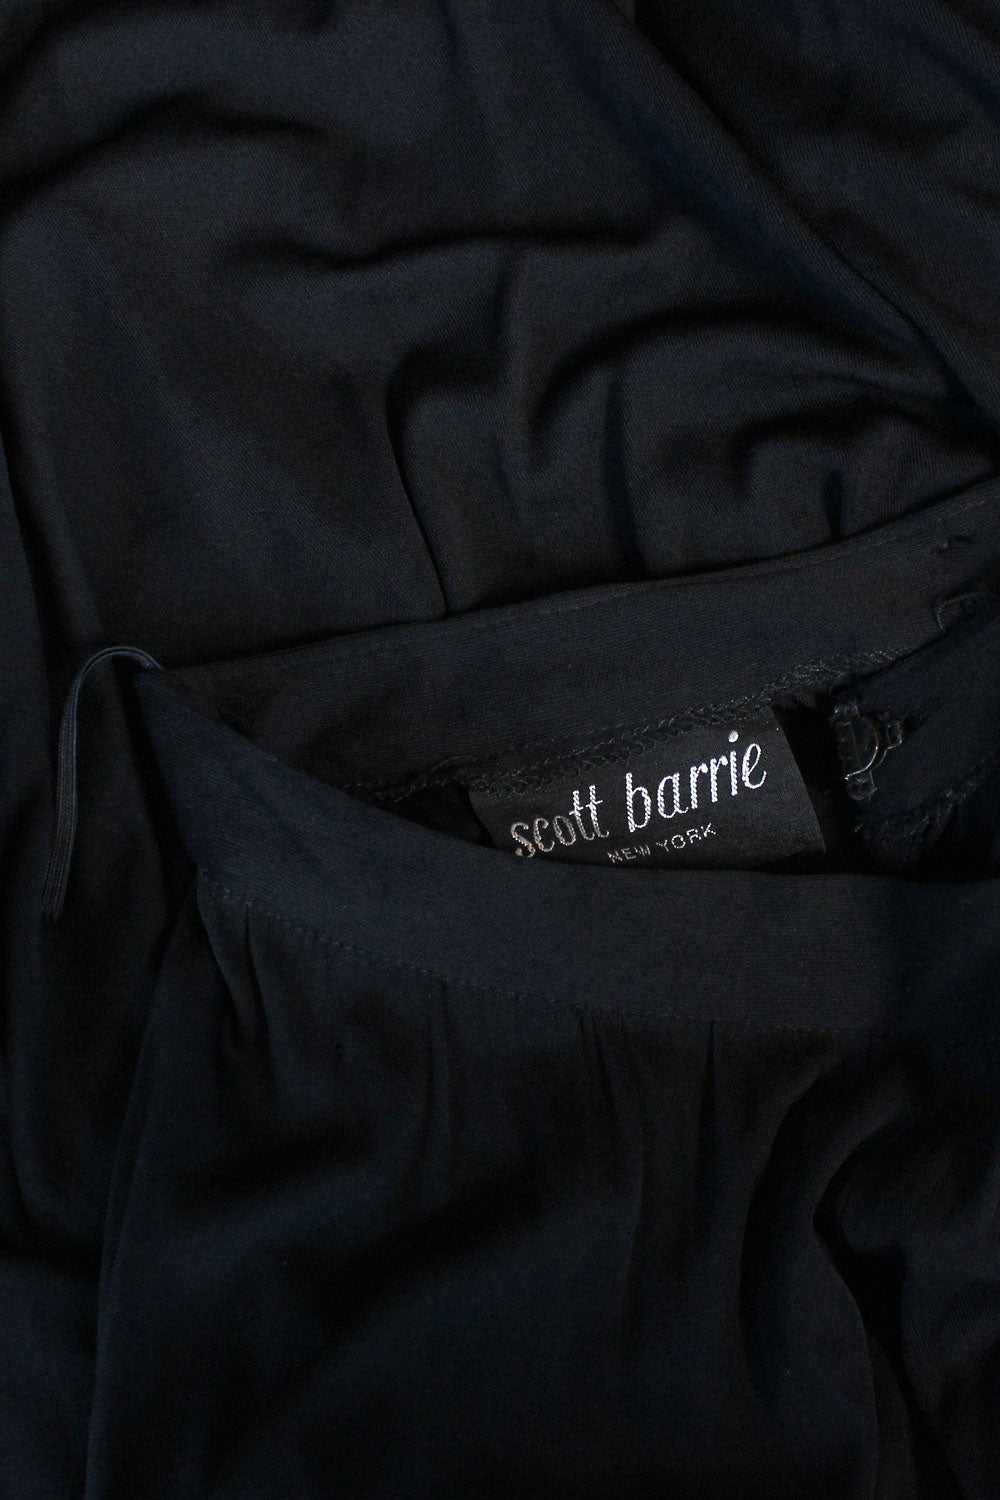 Scott Barrie Jersey Drape Skirt XS - image 6